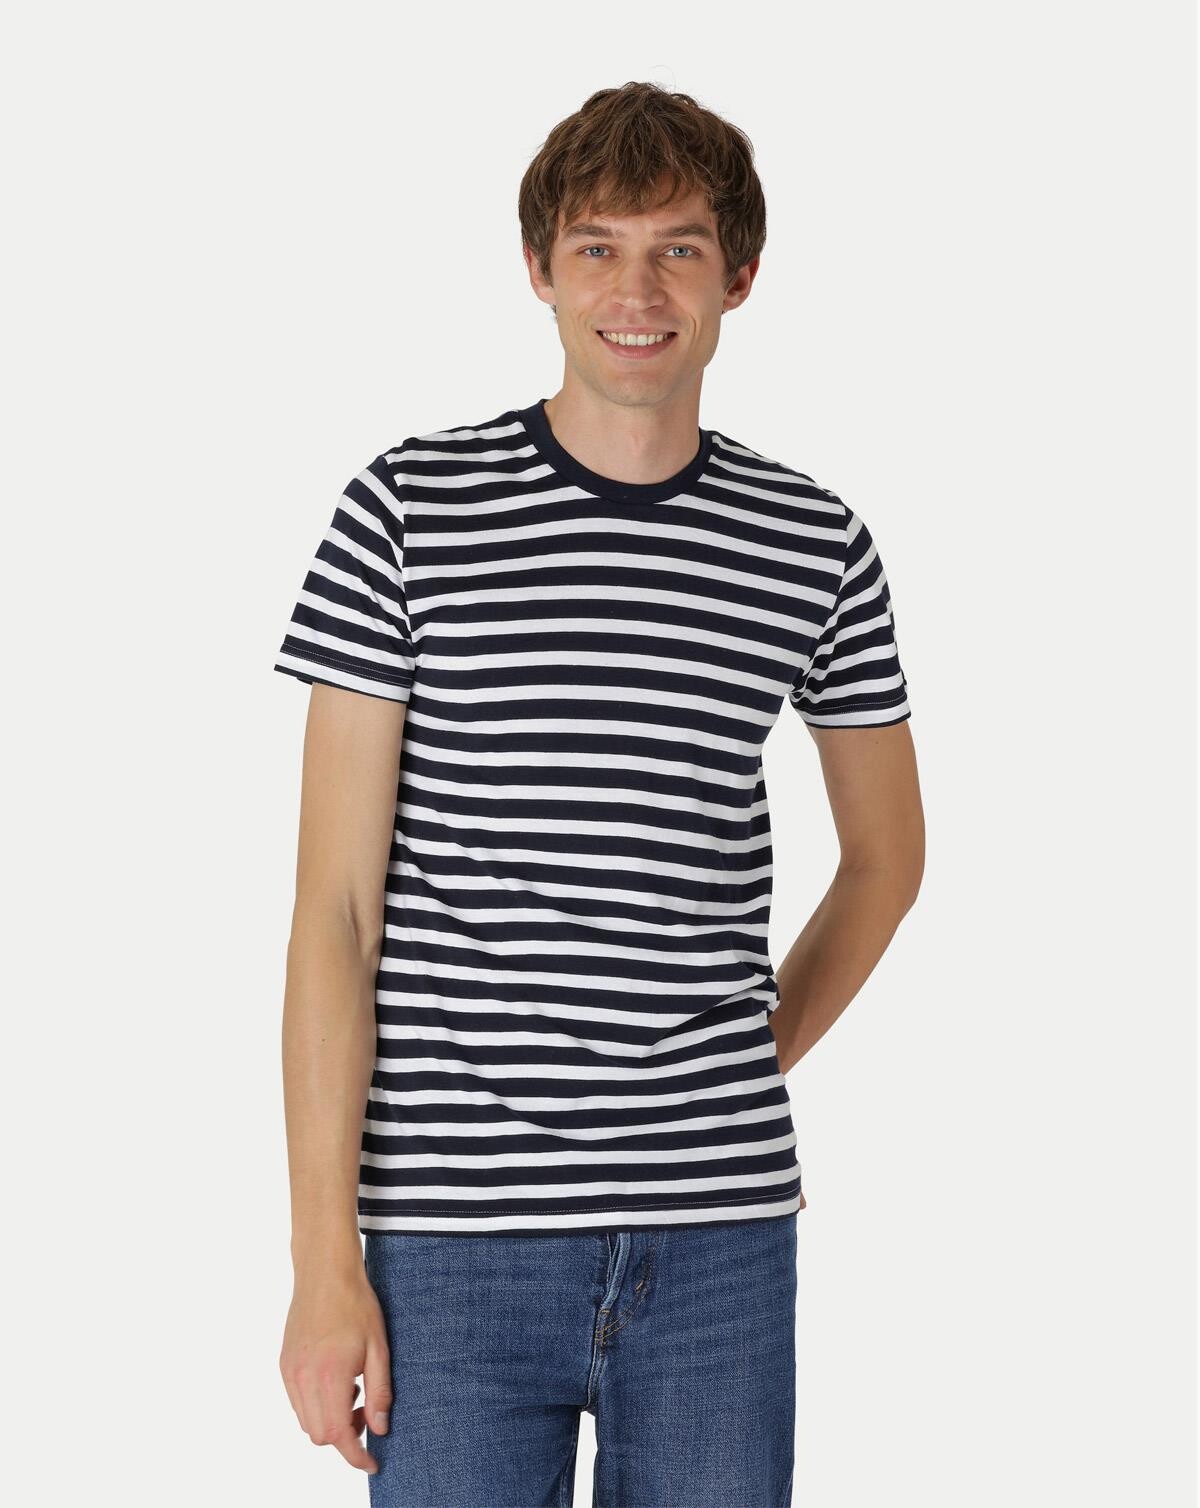 Neutral Økologisk T-shirt til - Tætsiddende (Blå / Hvid stribet, M)